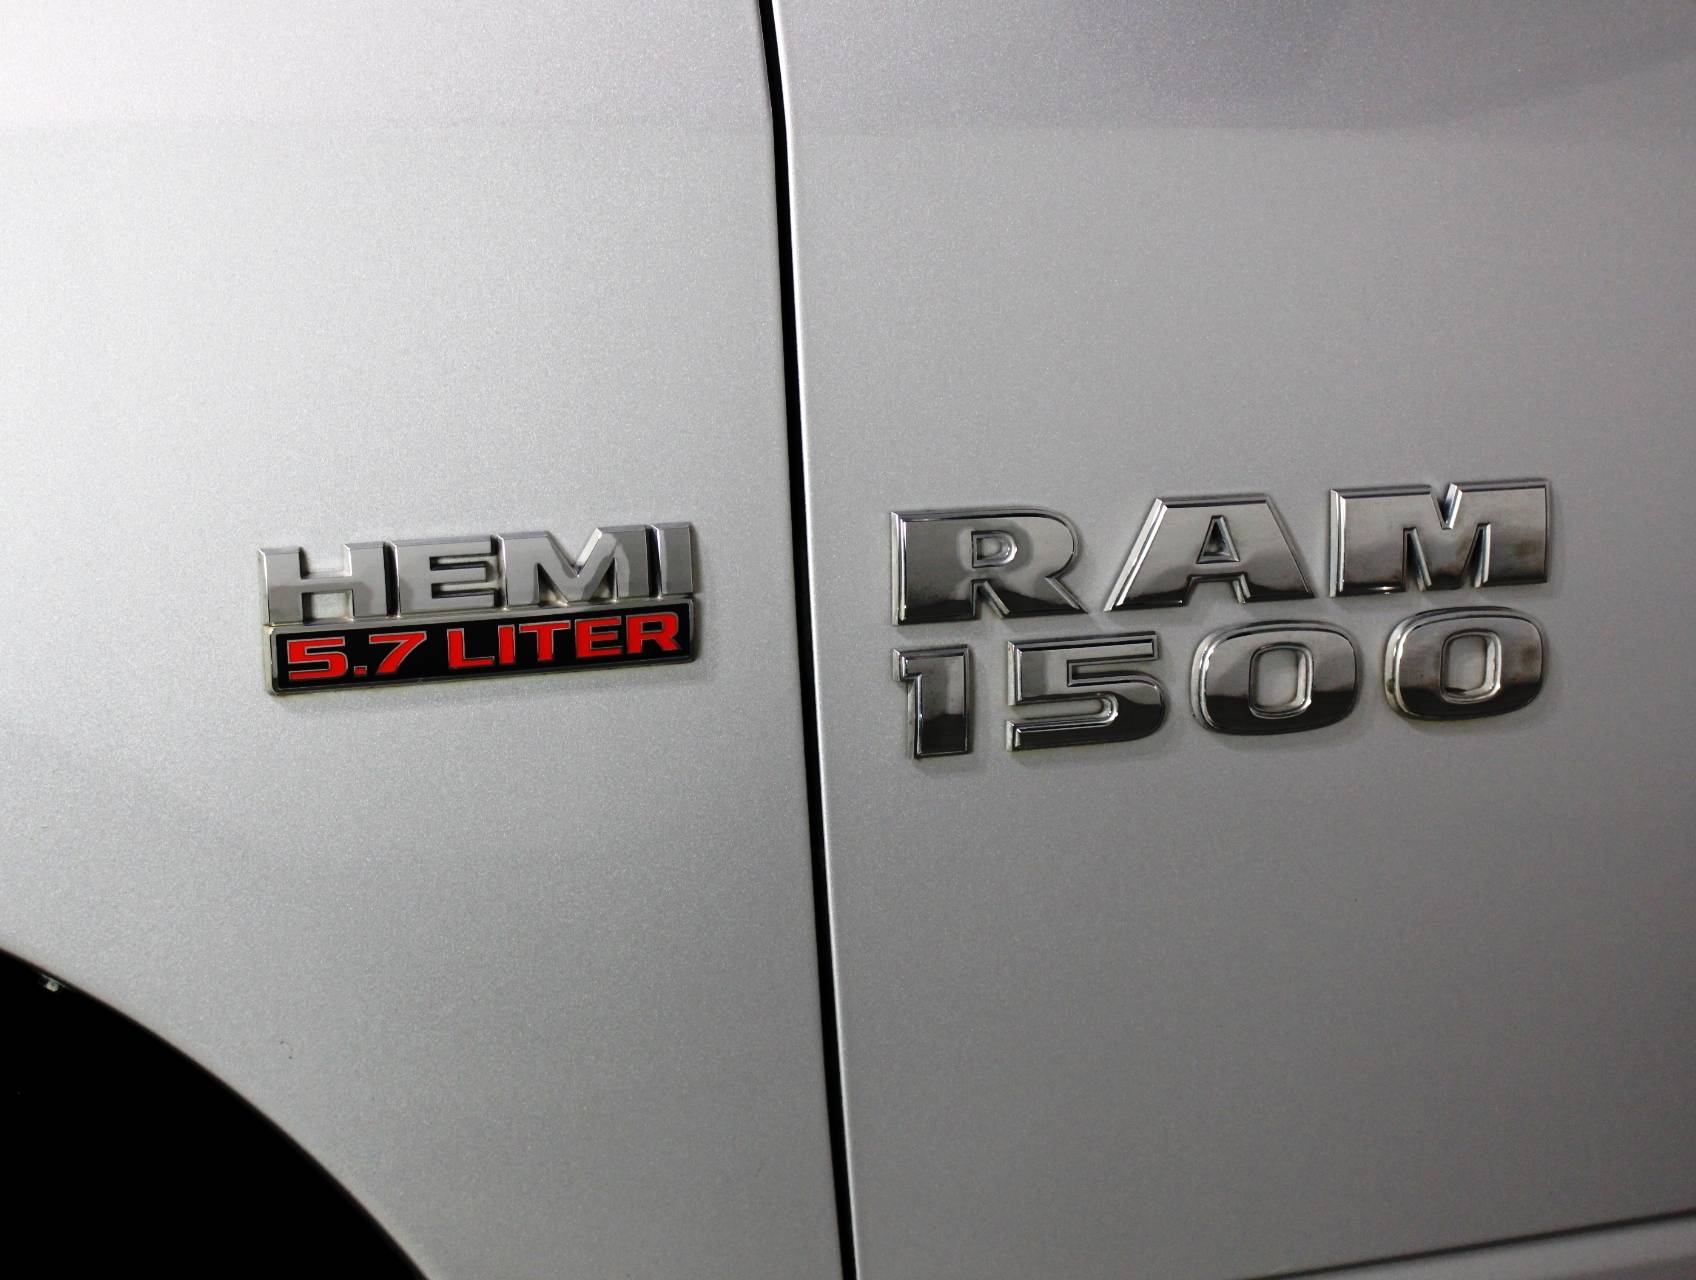 Florida Fine Cars - Used RAM 1500 2015 MIAMI Slt Big Horn